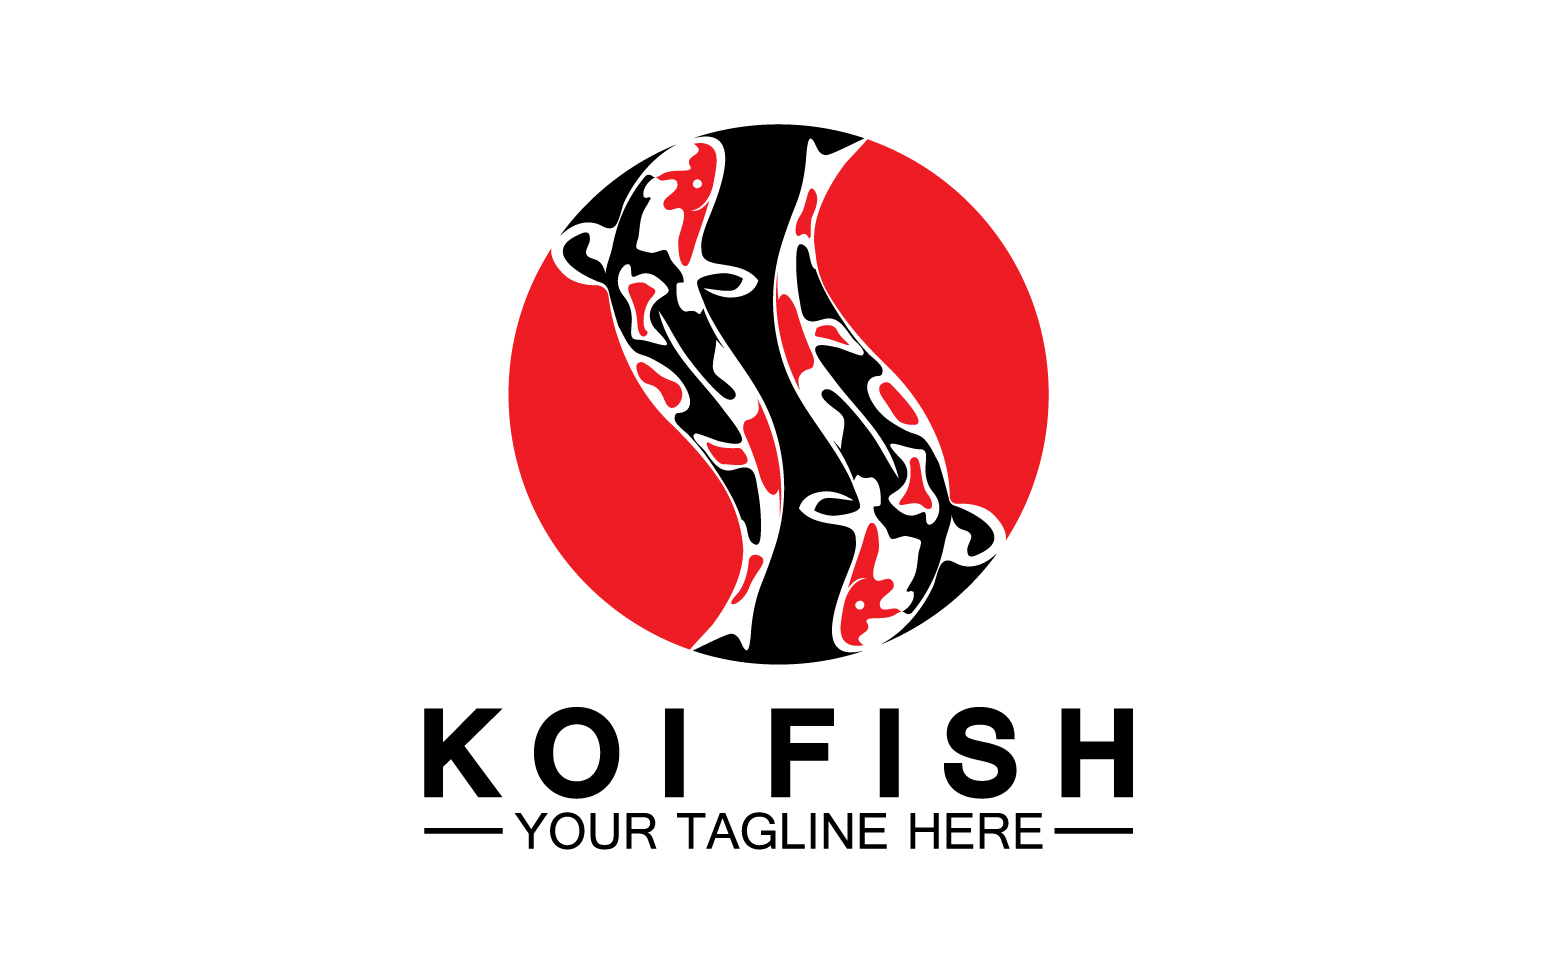 Fish koi black and red icon logo vector v51